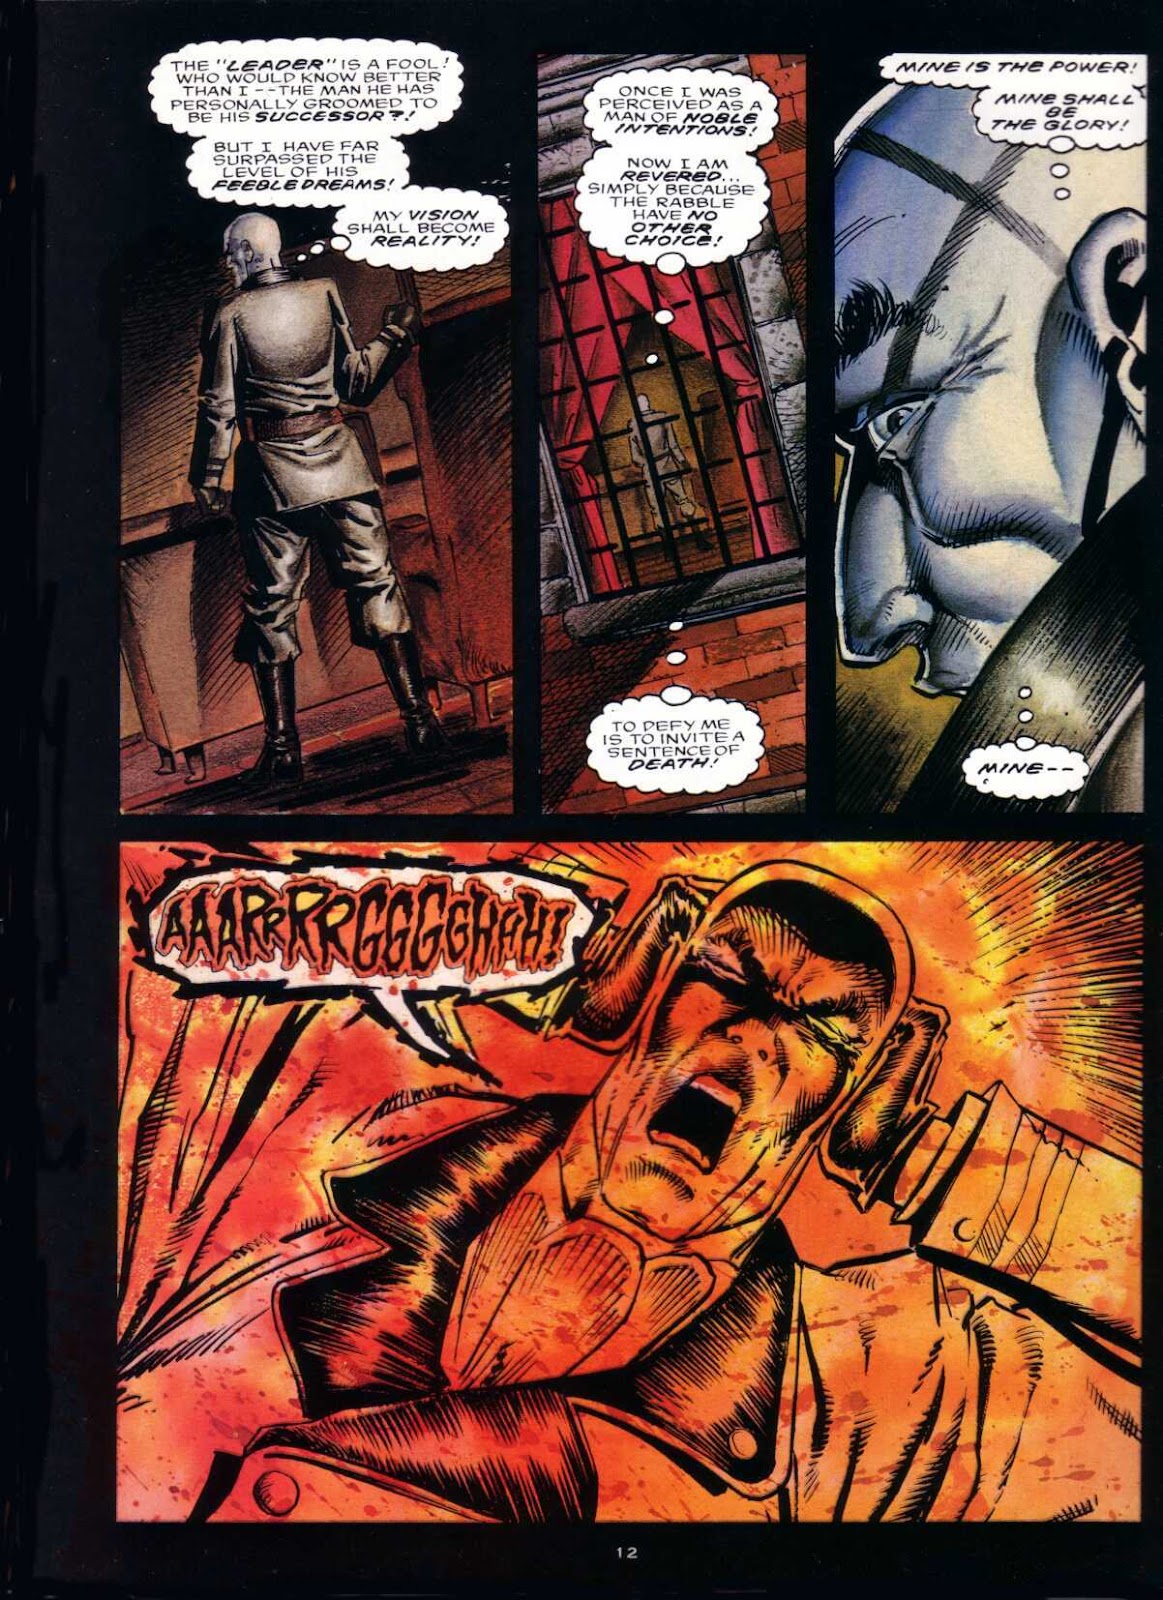 Marvel Graphic Novel issue 66 - Excalibur - Weird War III - Page 12